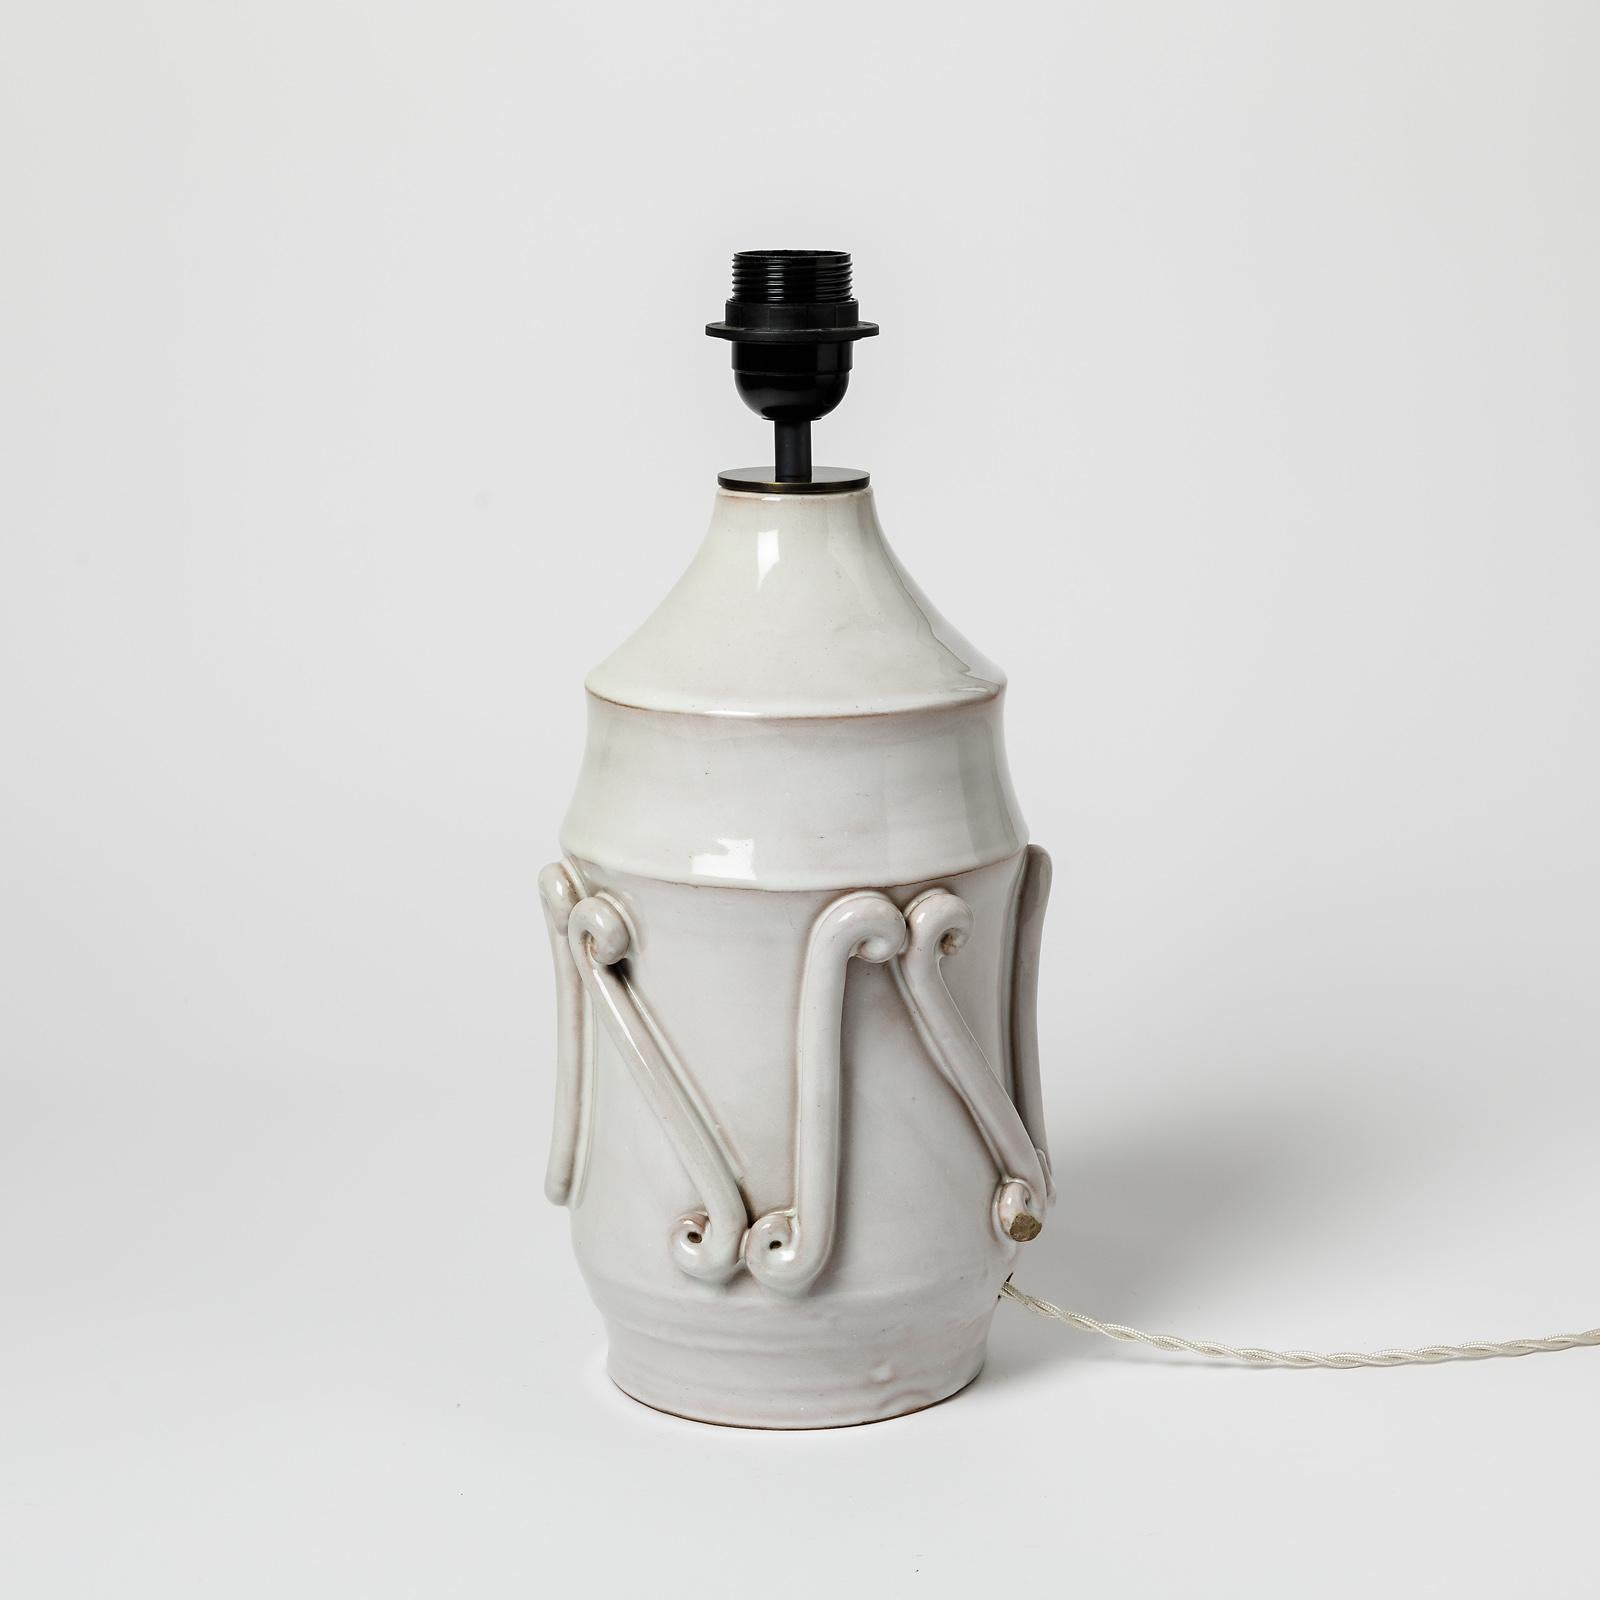 20th Century Ceramic Table Lamp by Tim Orr, circa 1970-1980